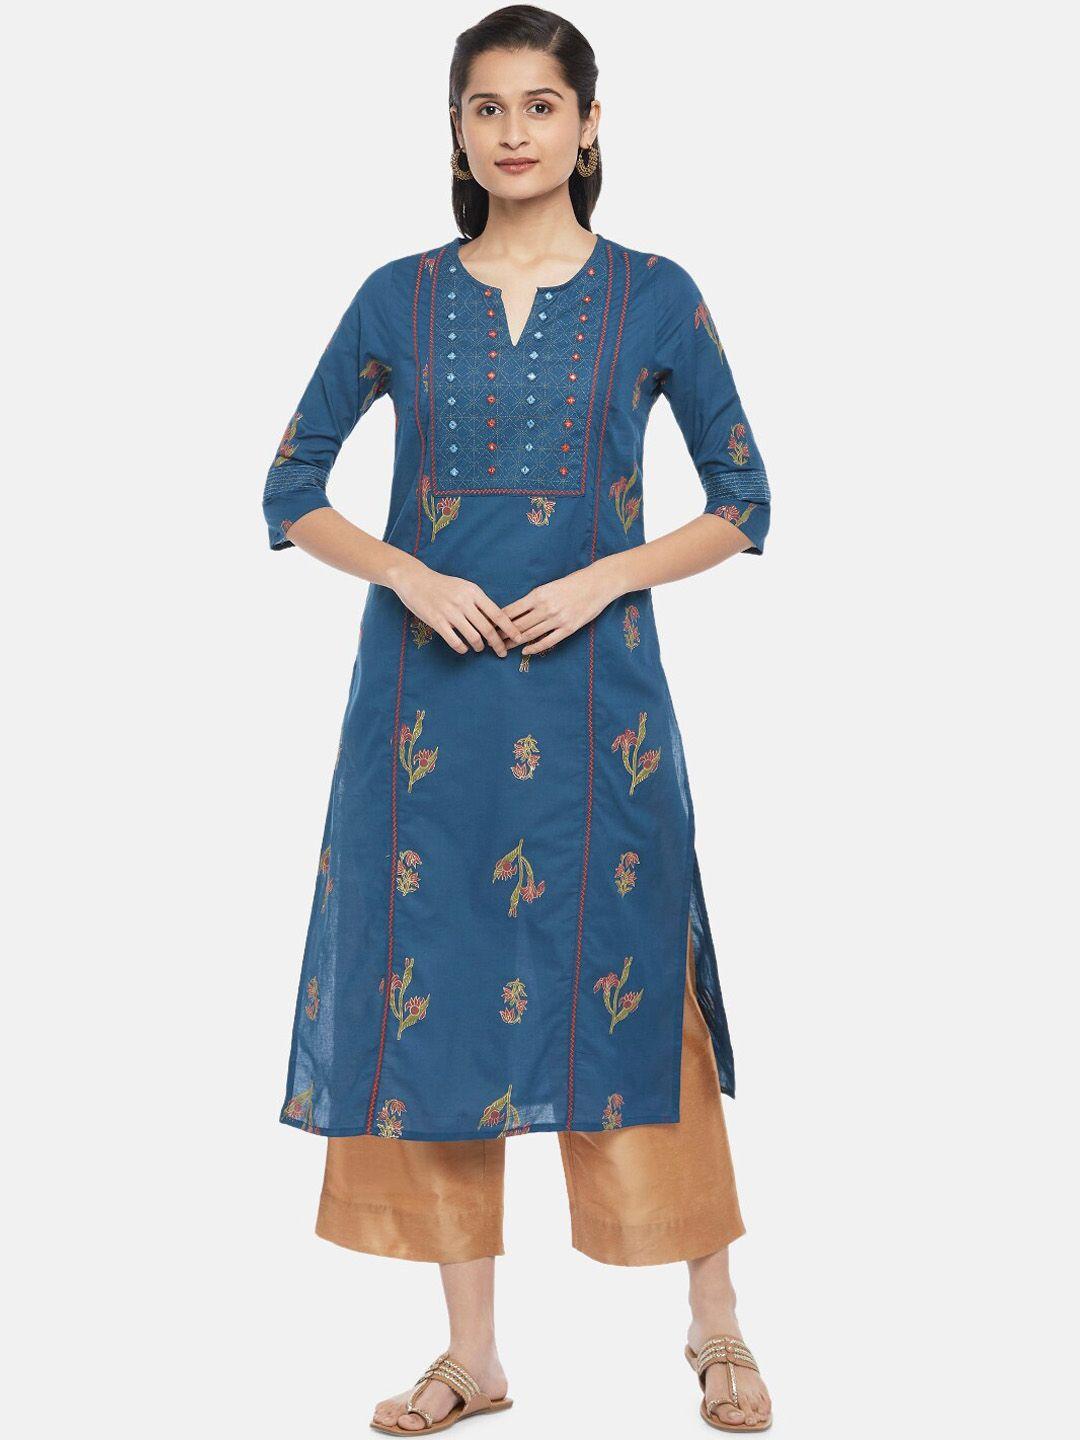 rangmanch-by-pantaloons-women-teal-ethnic-motifs-embroidered-mirror-work-kurta-set-with-dupatta